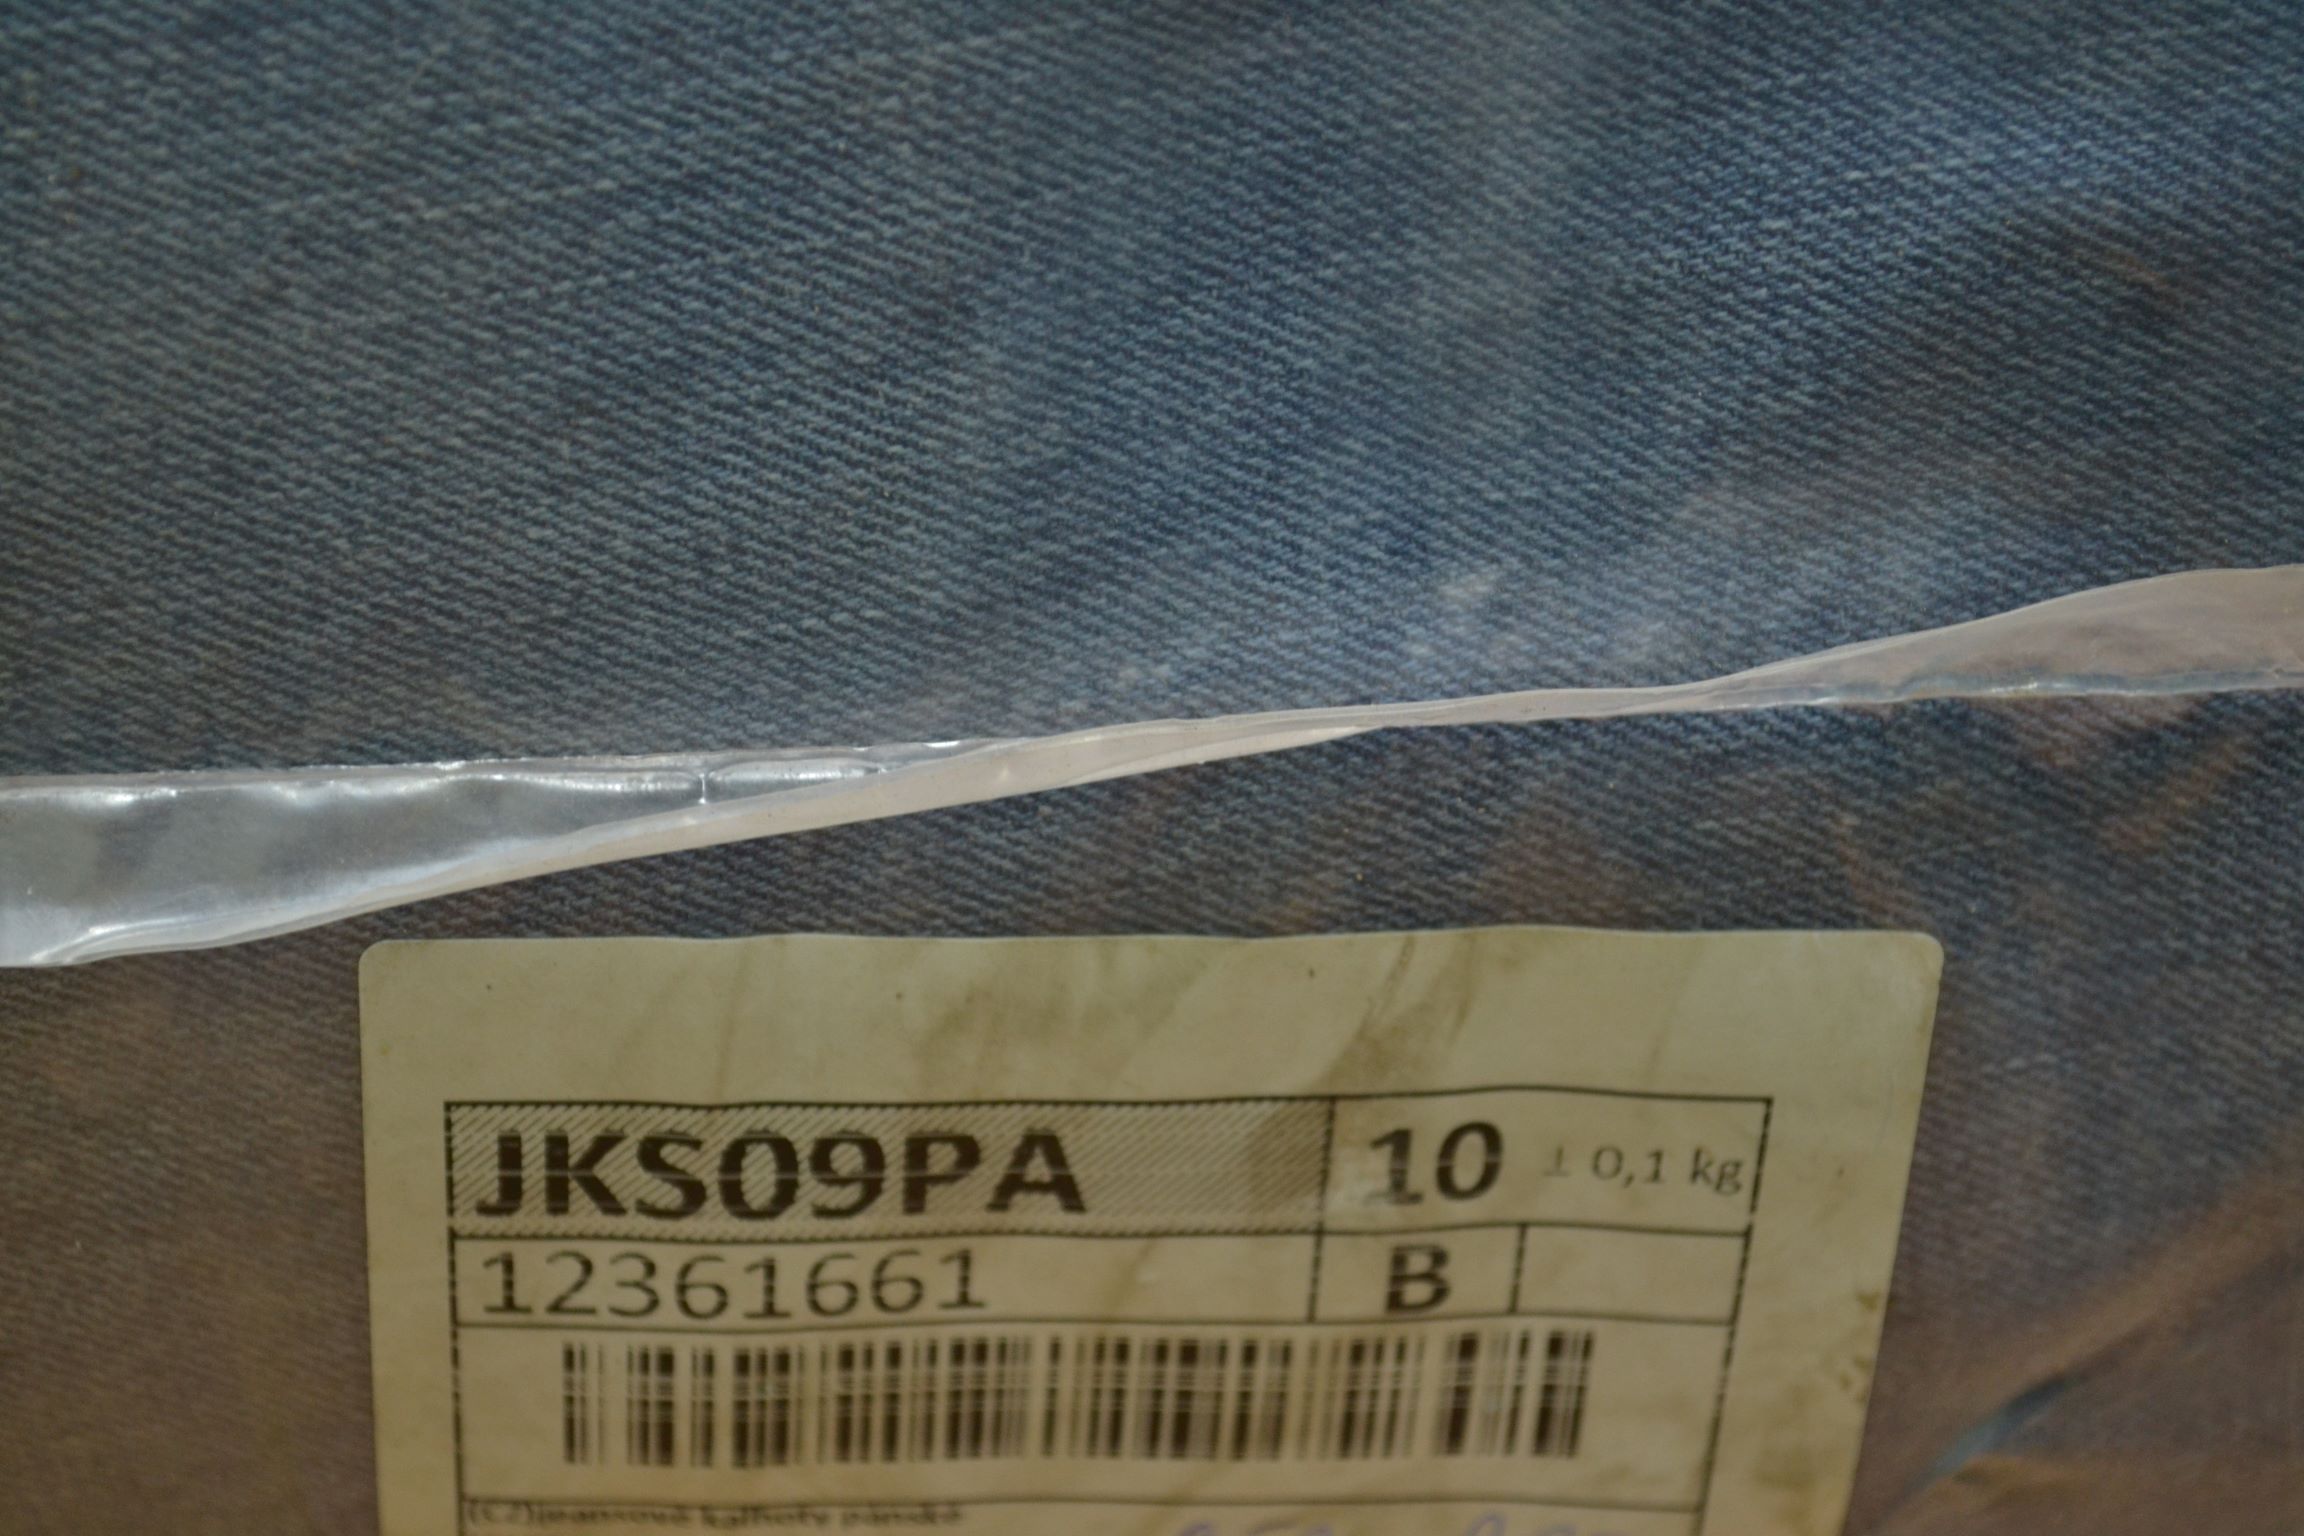 JKS09PA Джинсовые мужские брюки; код мешка 12361661